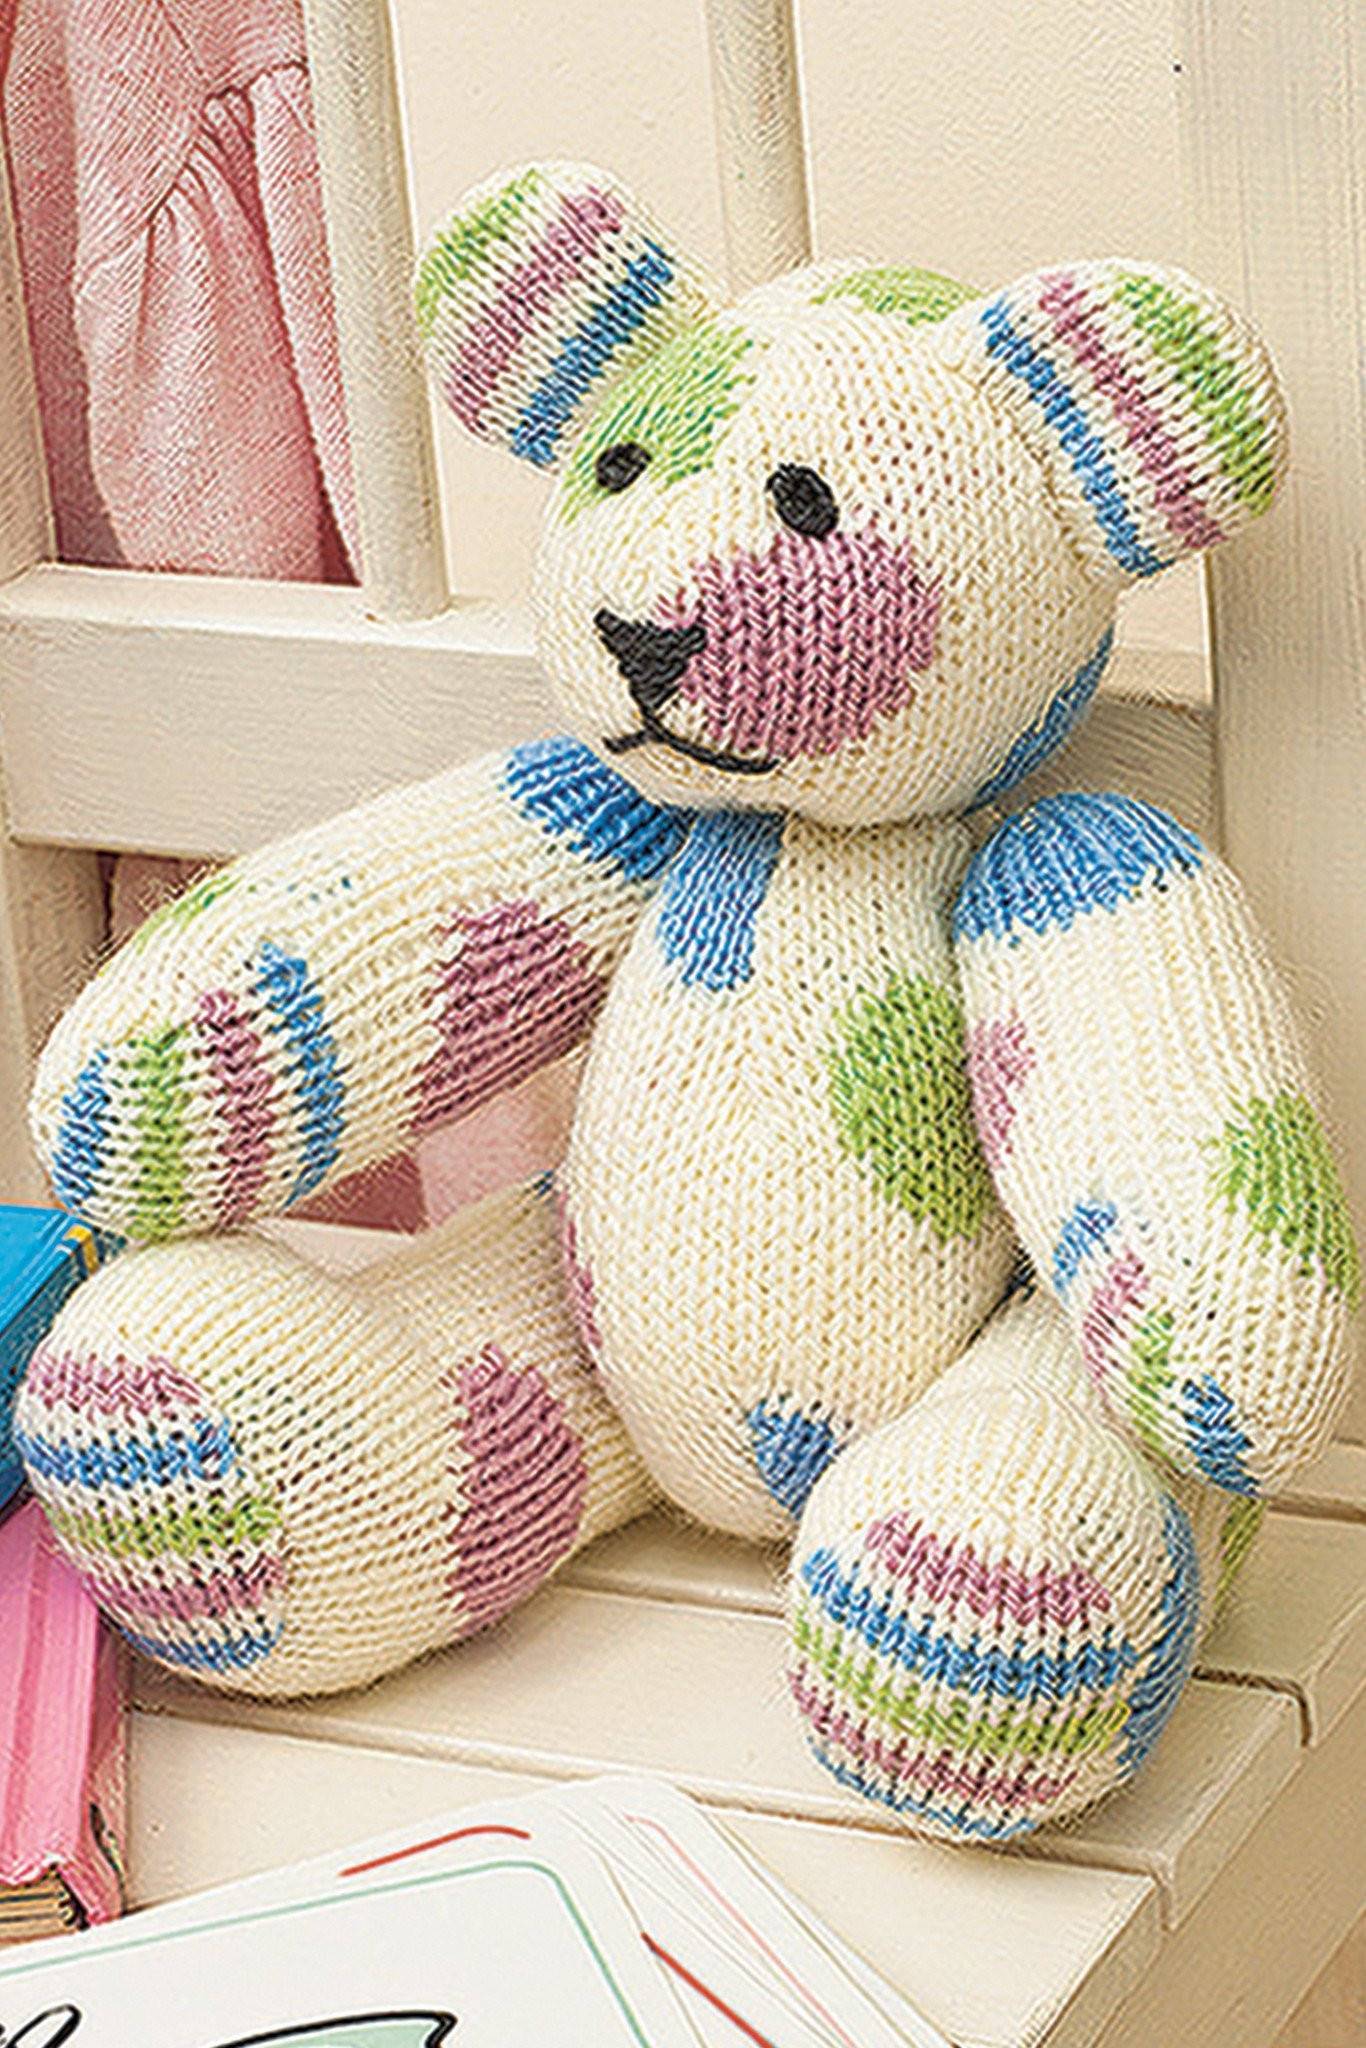 Patterned Teddy Bear Make Knitting Pattern | The Knitting ...